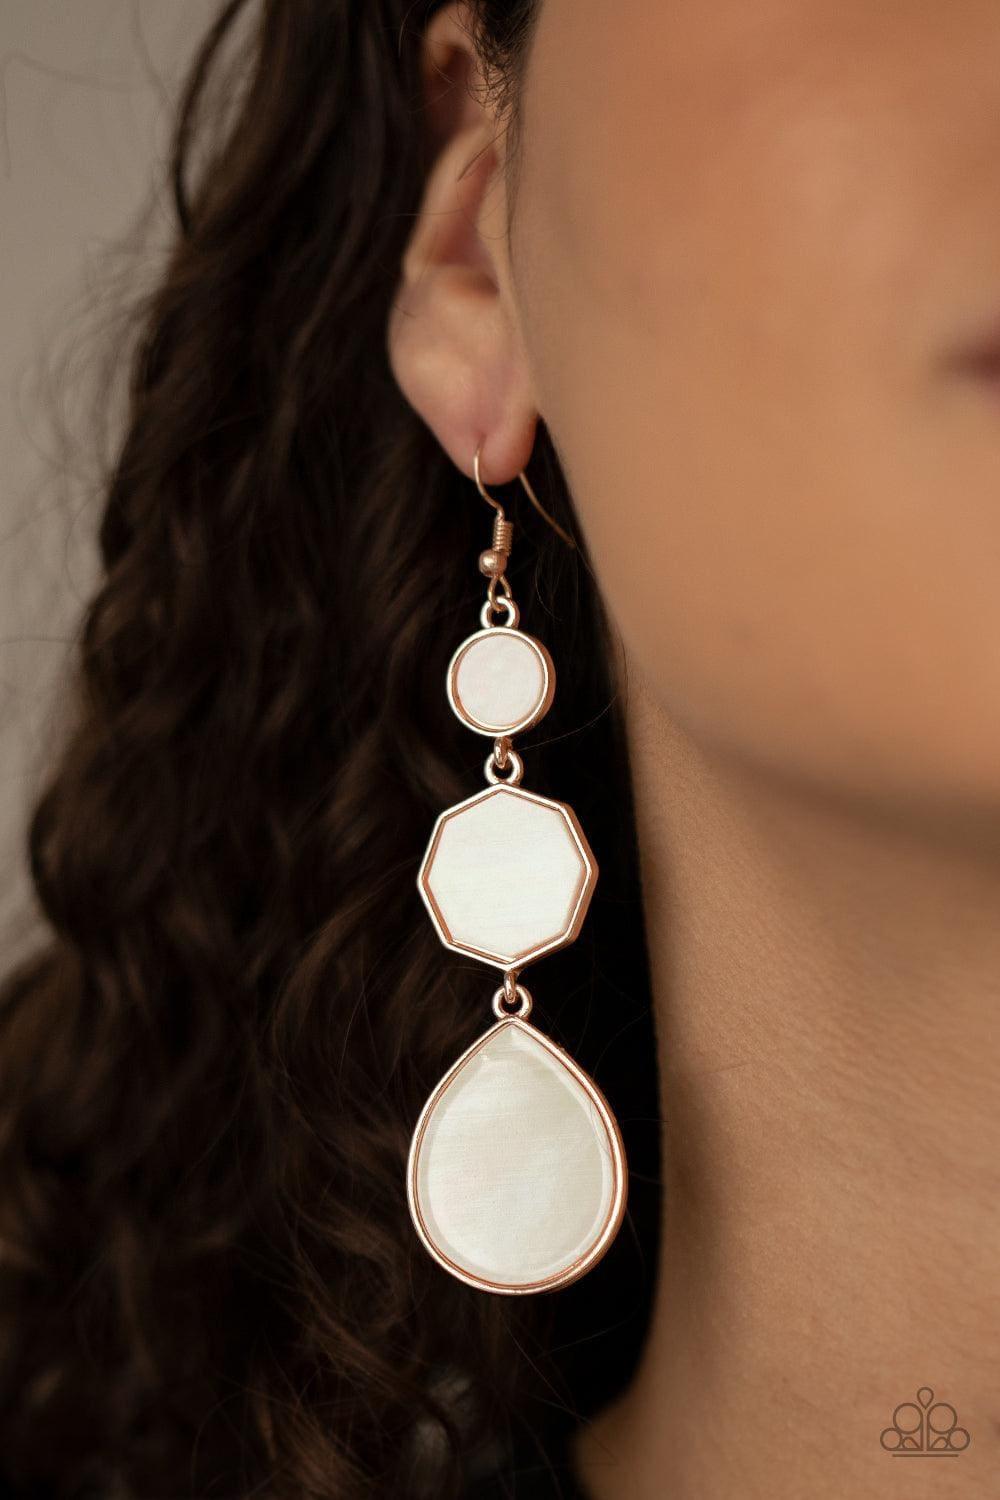 Paparazzi Accessories - Progressively Posh - Rose Gold Earrings - Bling by JessieK